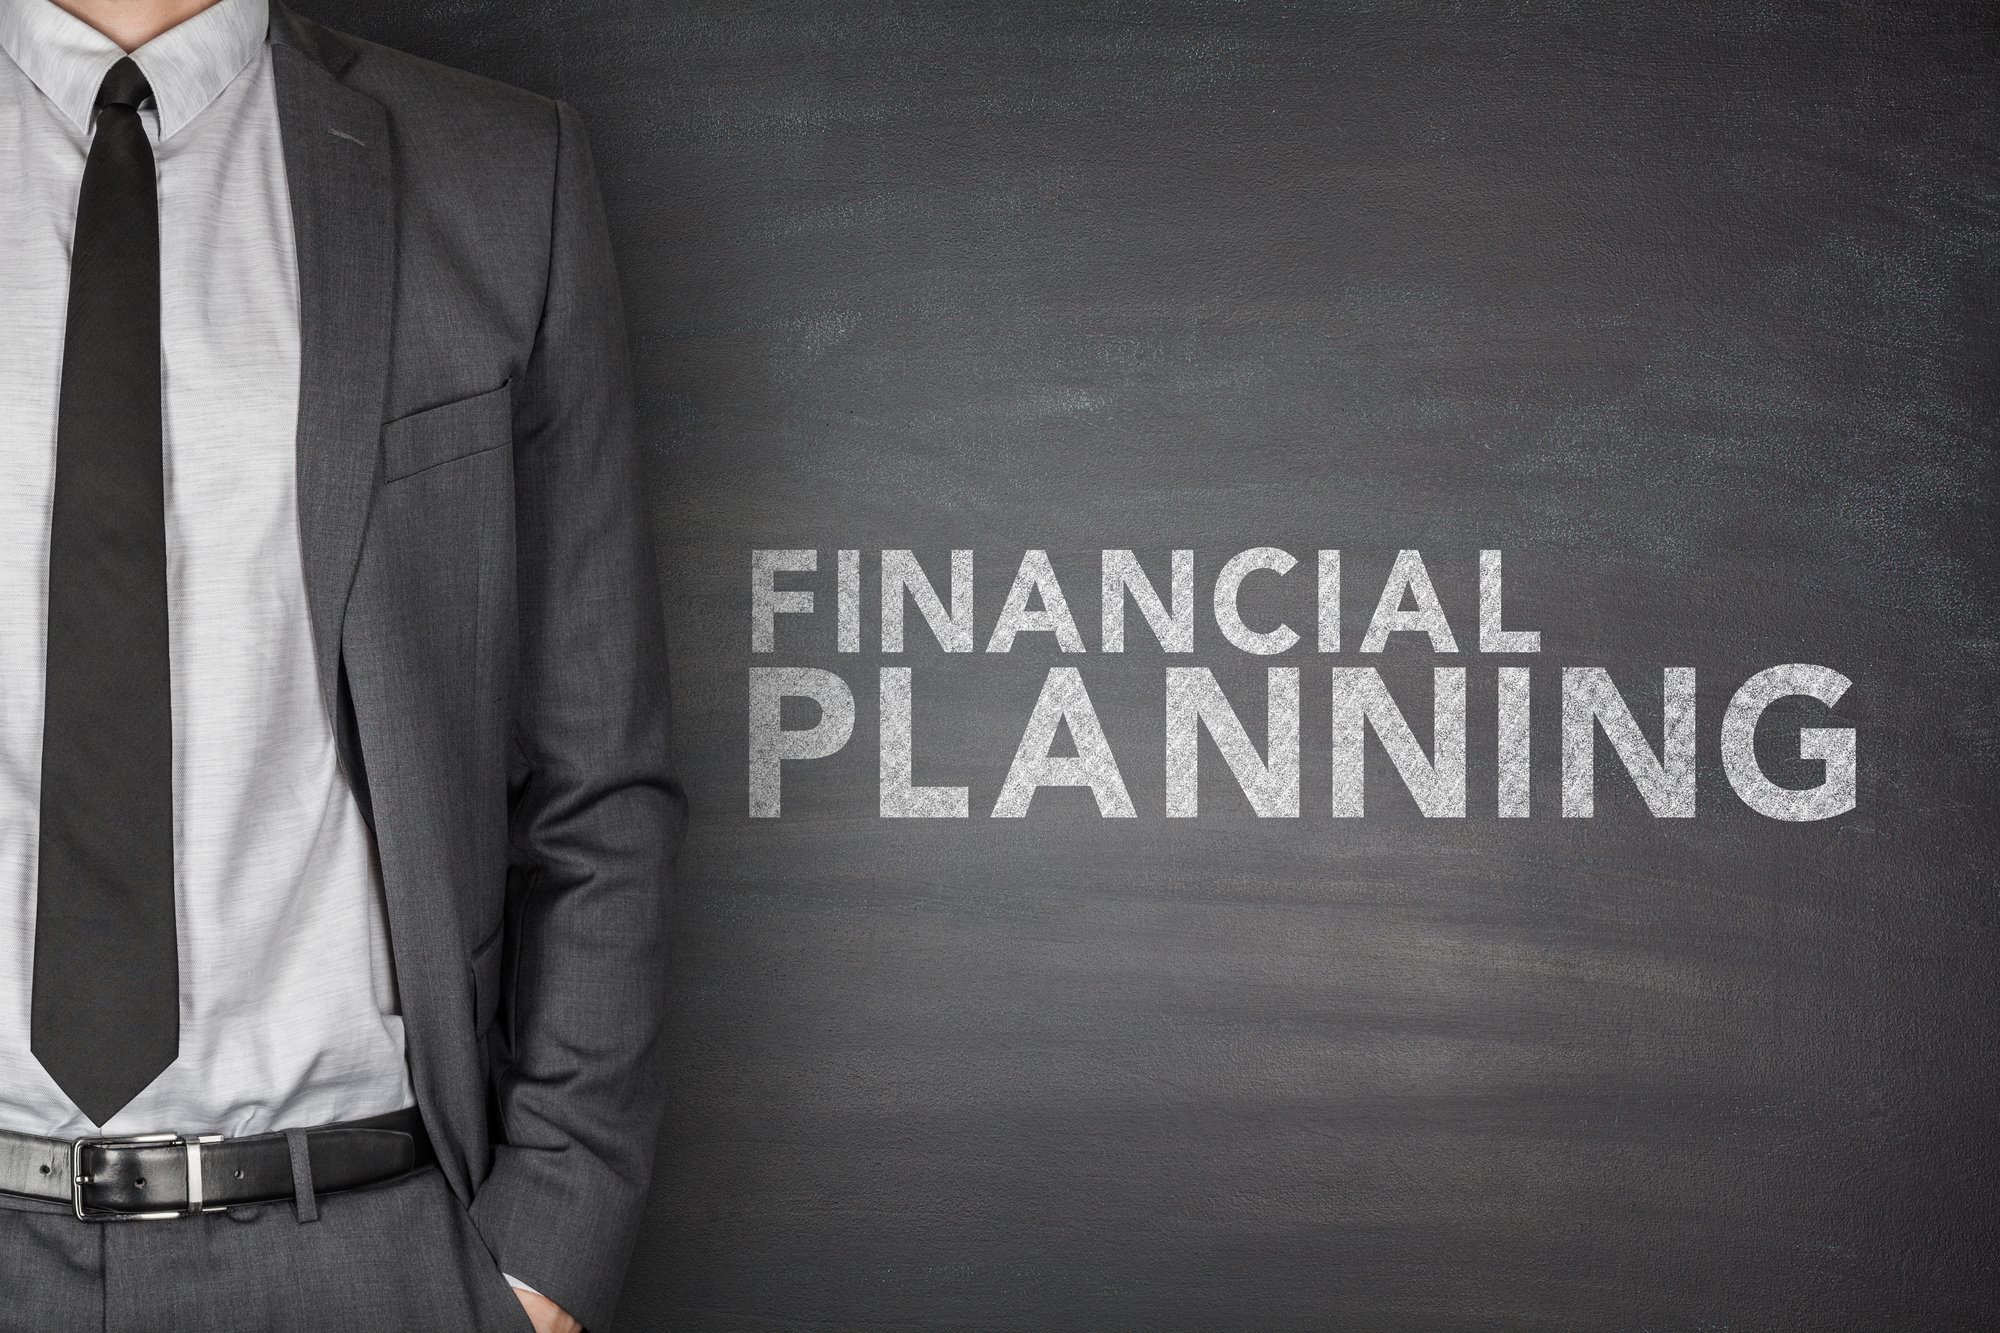 Financial planning text on black blackboard with businessman